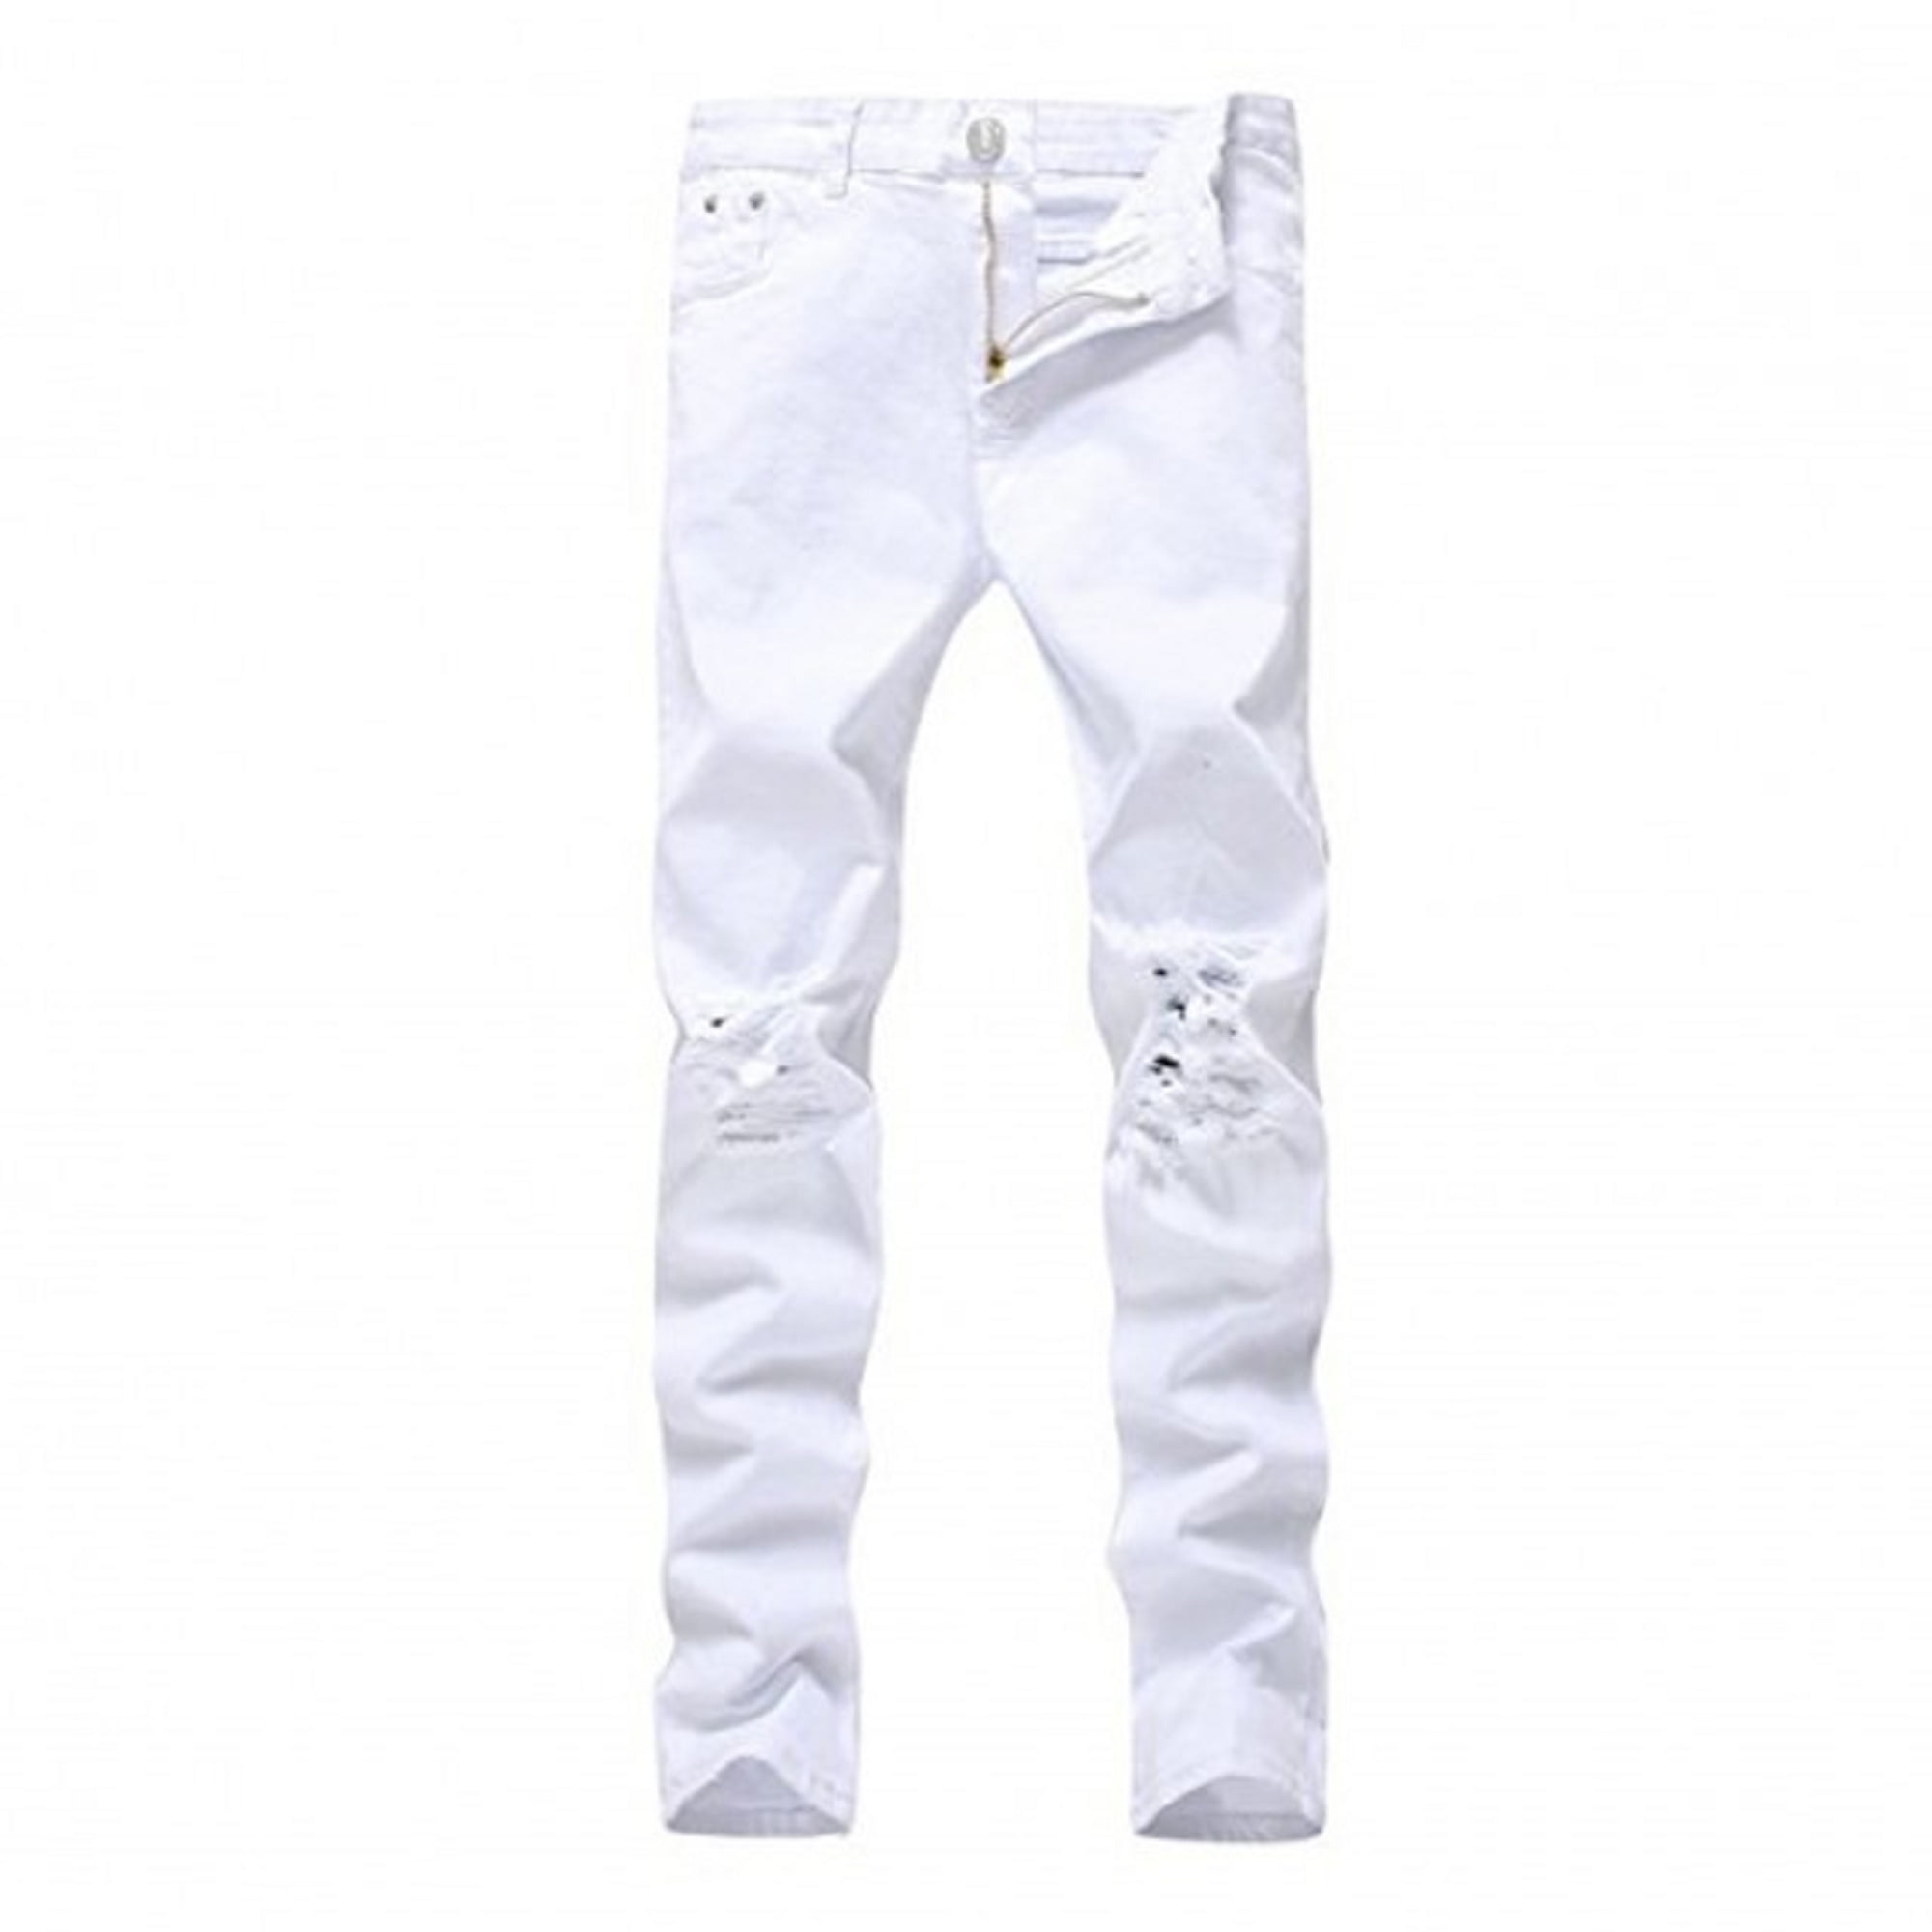 White Boys Jeans - Walmart.com